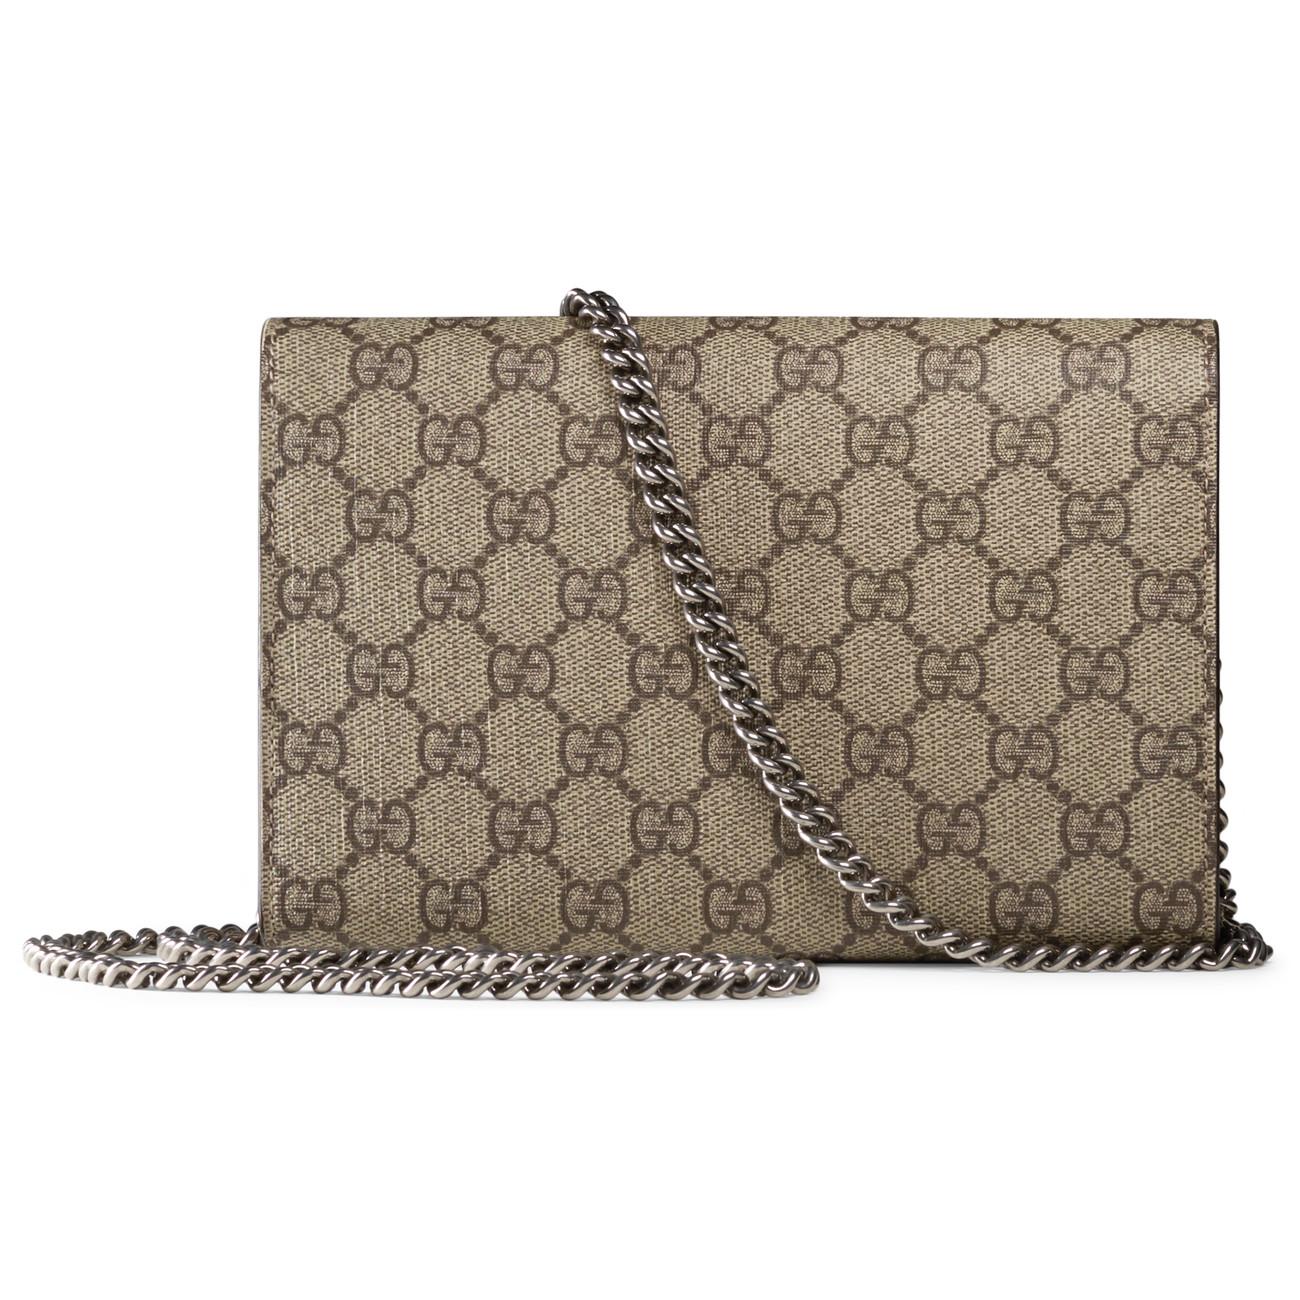 Gucci Canvas Dionysus GG Supreme Chain Shoulder Bag - Save 26% - Lyst